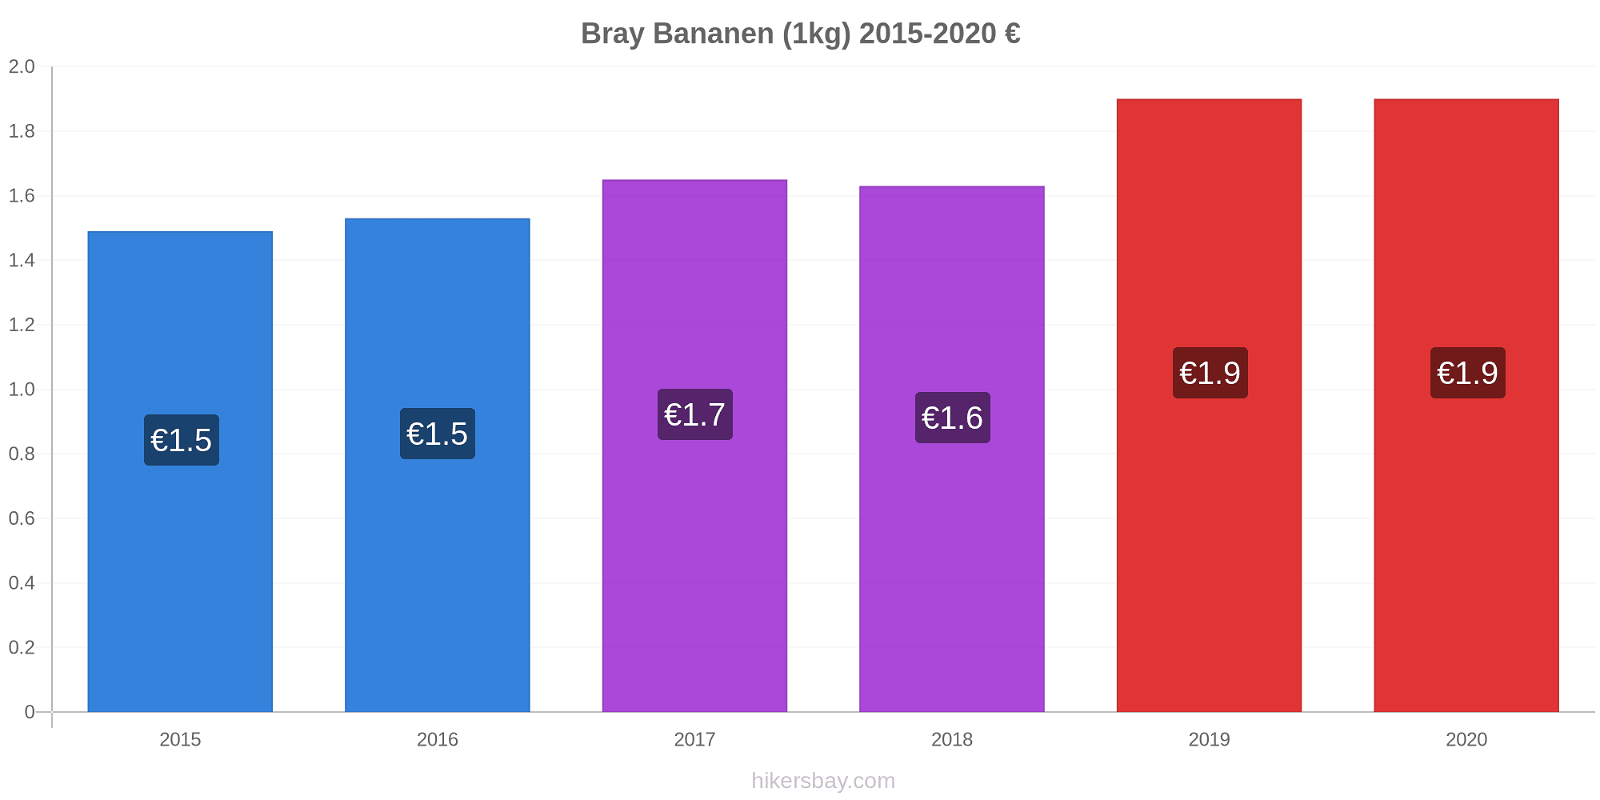 Bray Preisänderungen Banane (1kg) hikersbay.com